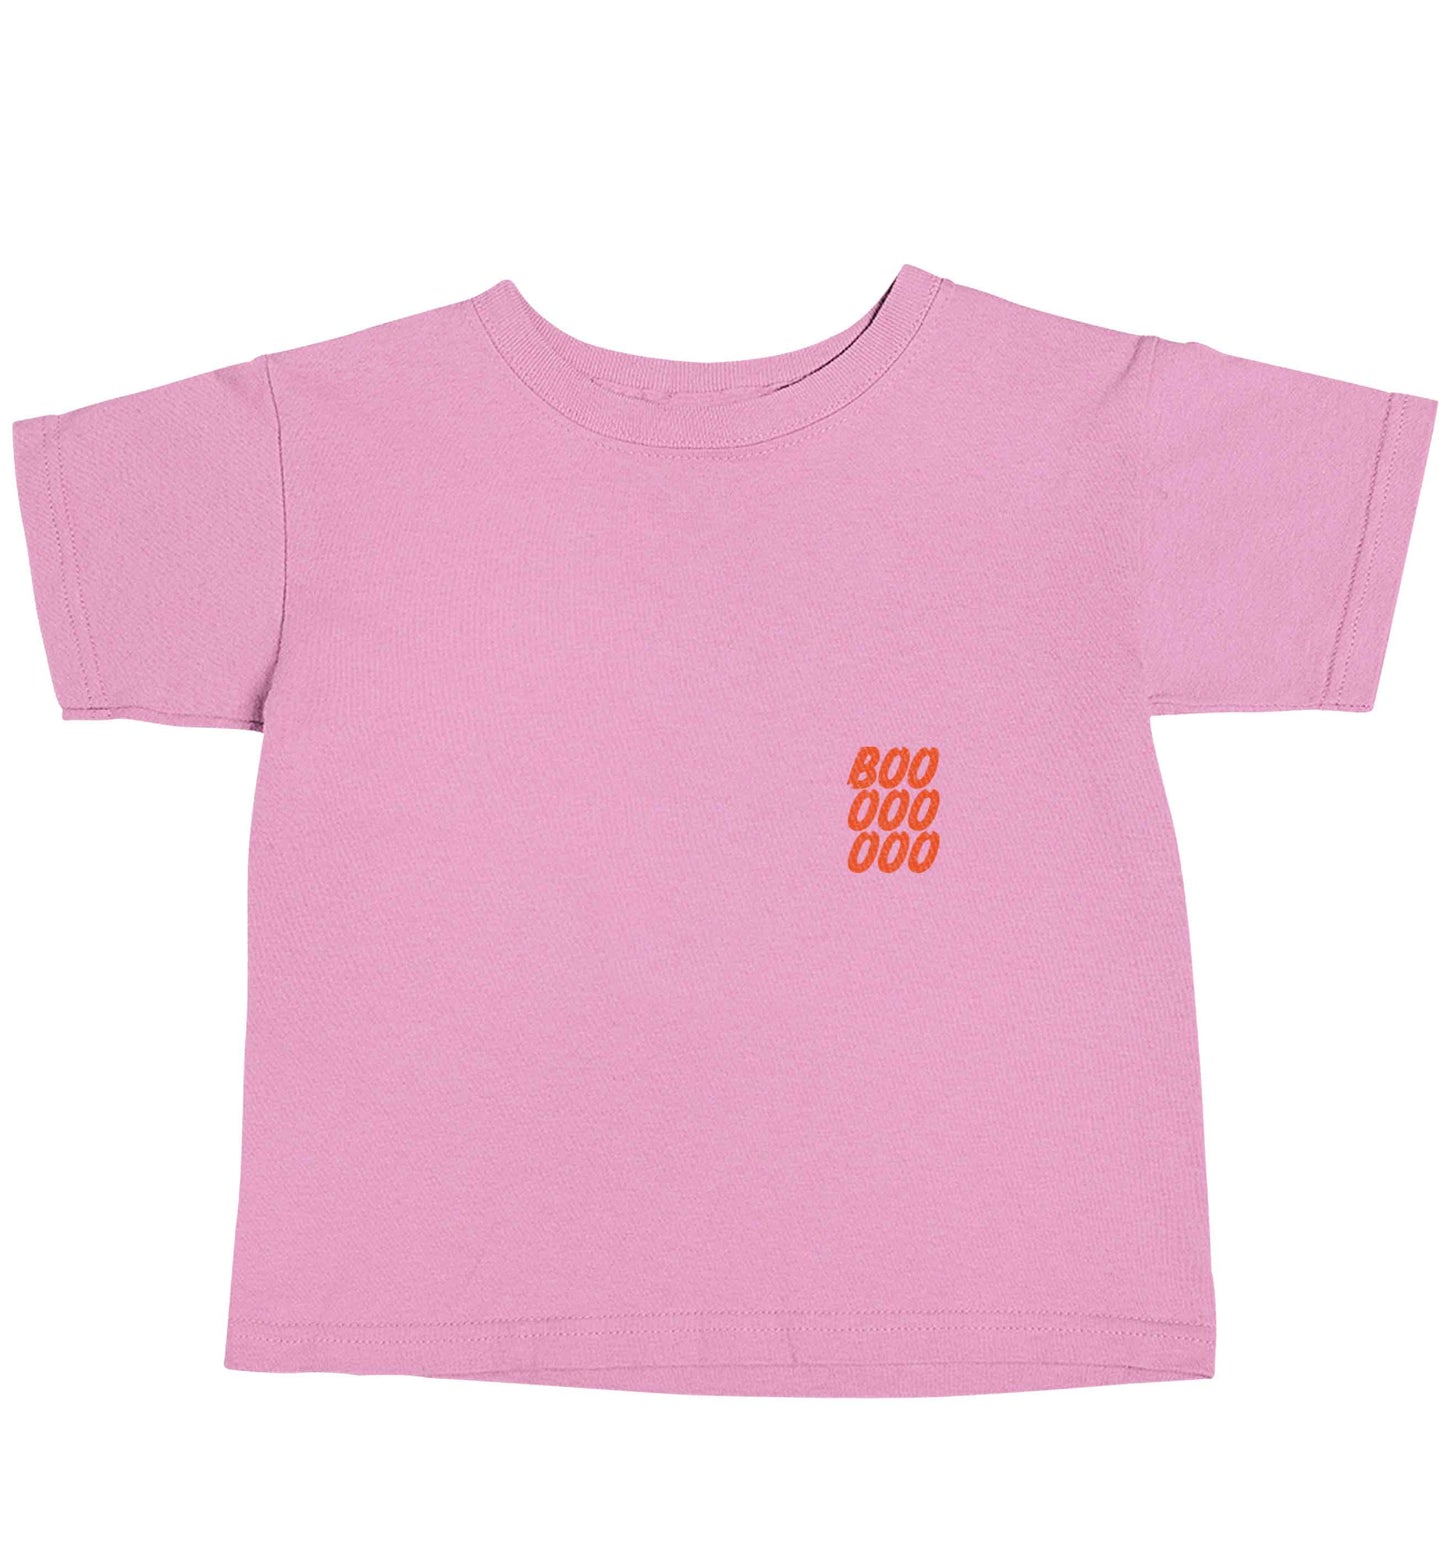 Boo pocket light pink baby toddler Tshirt 2 Years